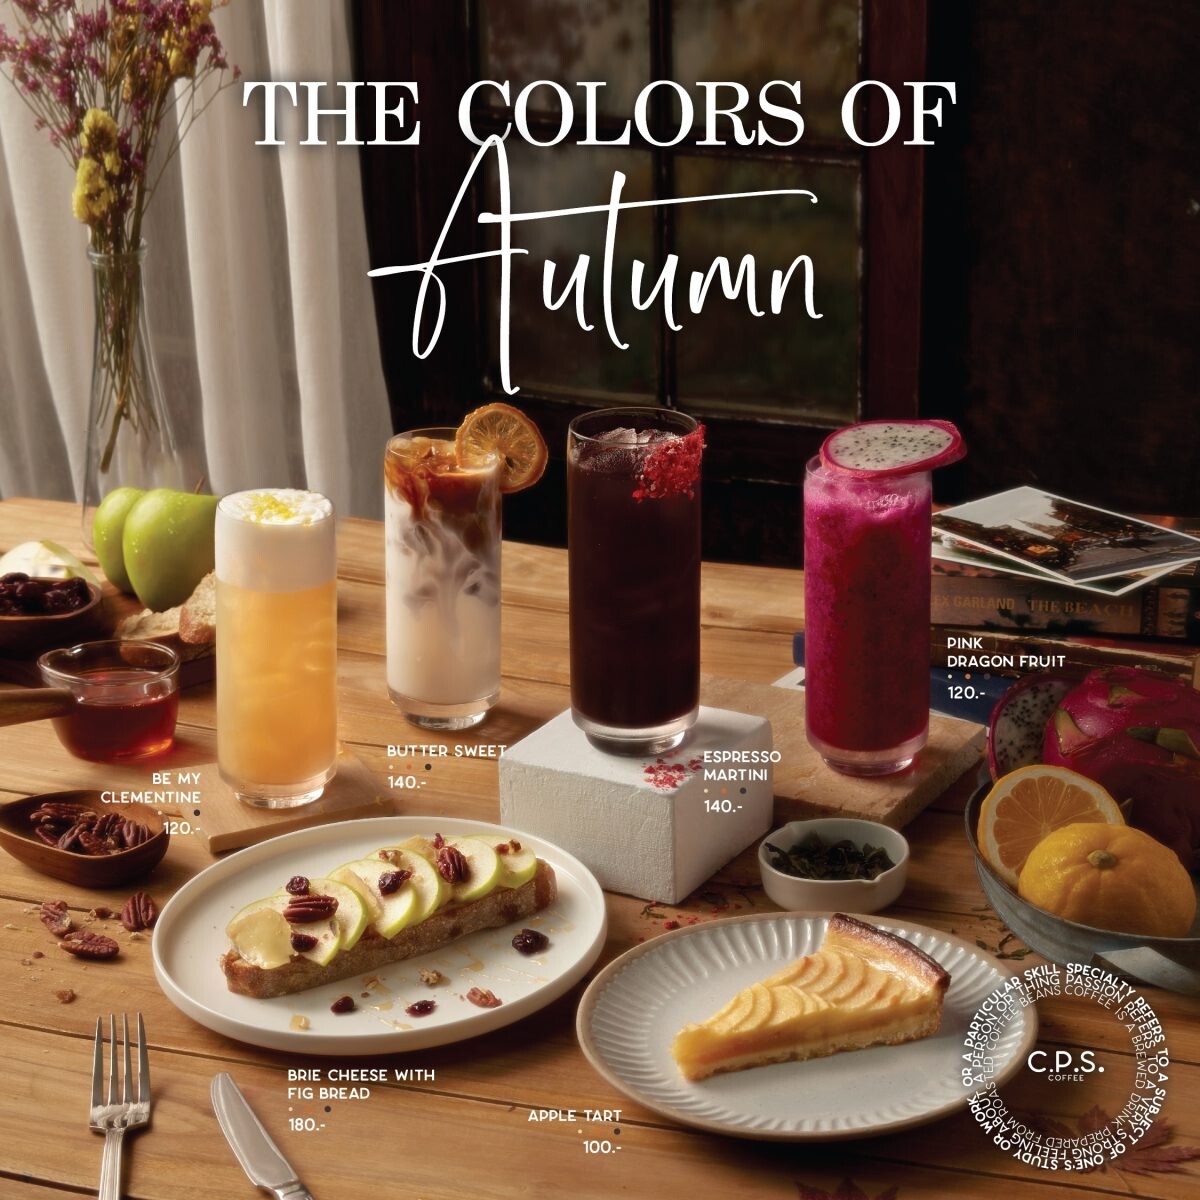 C.P.S. COFFEE รังสรรค์เมนูต้อนรับฤดูใบไม้ร่วง กับคอนเซ็ปต์ "The Colors Of Autumn" ที่ได้แรงบันดาลใจจากสีสันของฤดูกาล